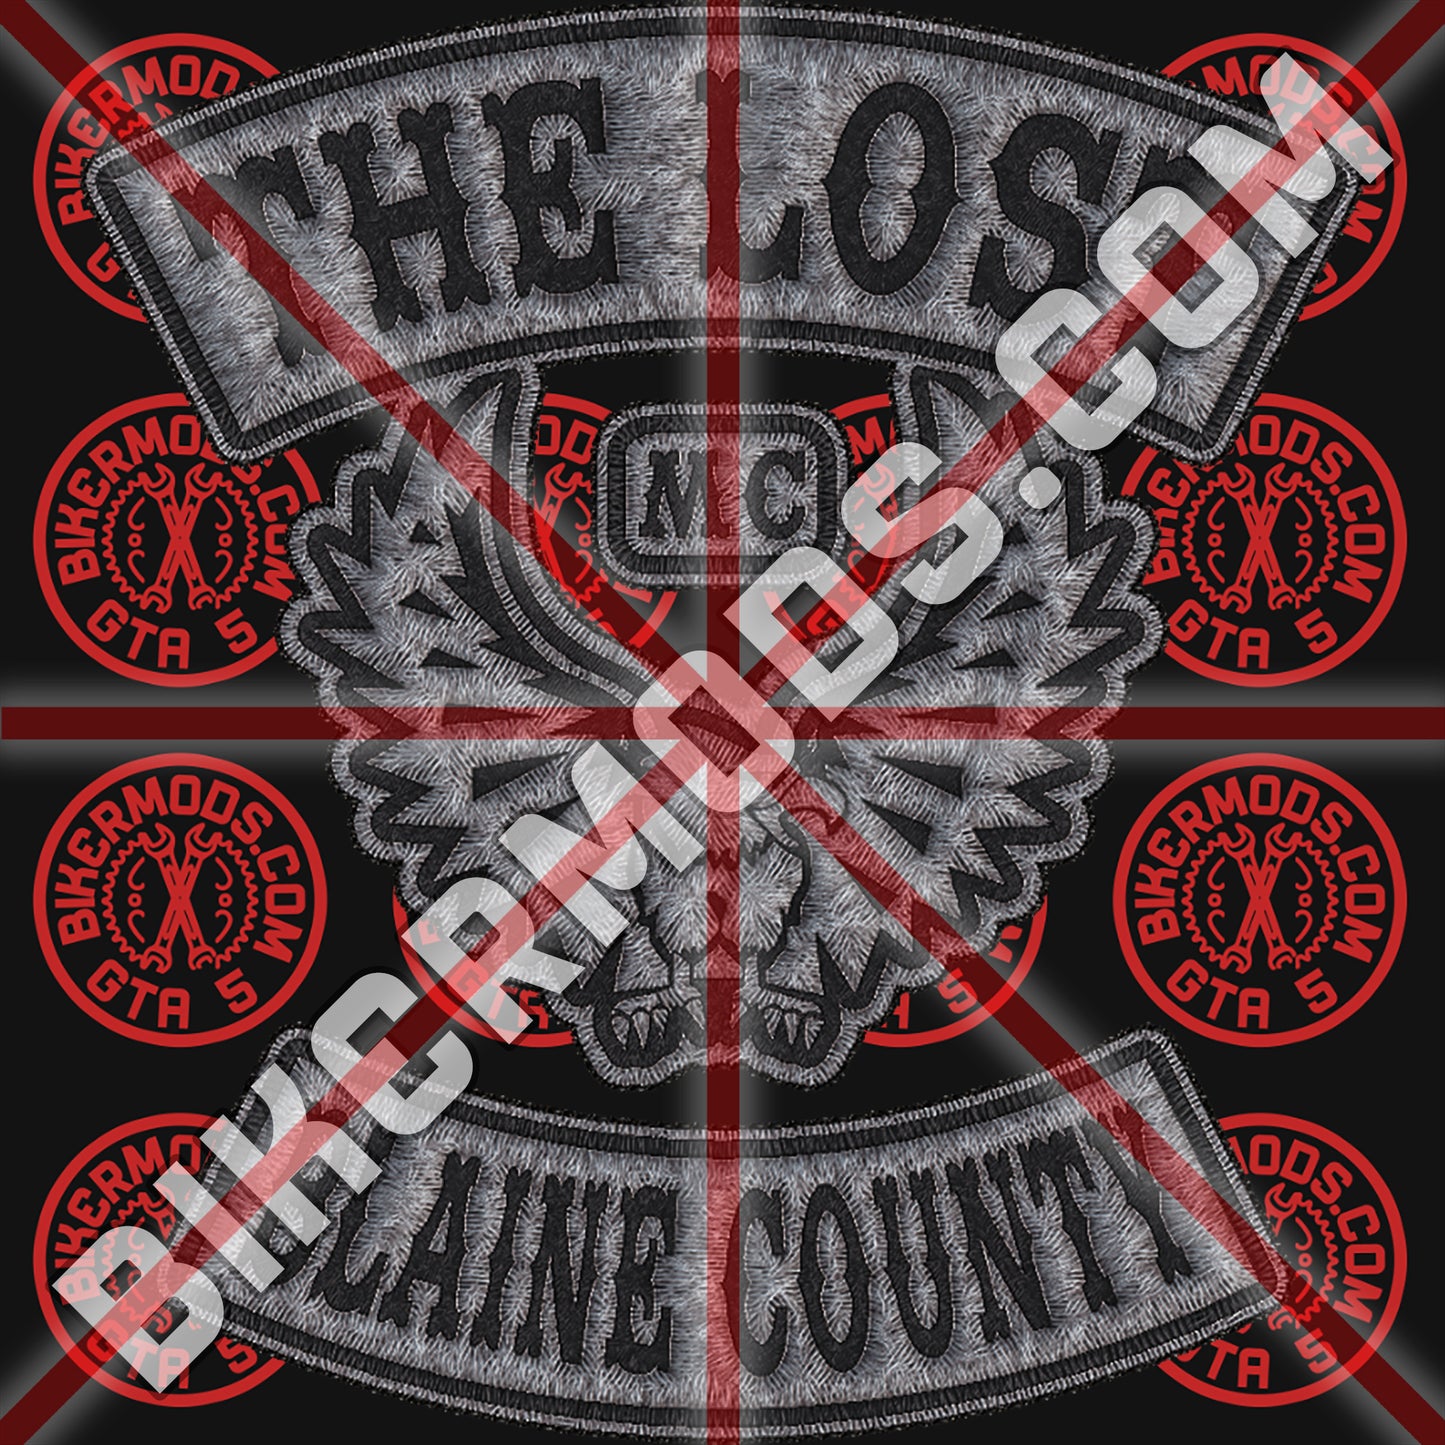 The Lost MC (Blaine County) Westcoast Style